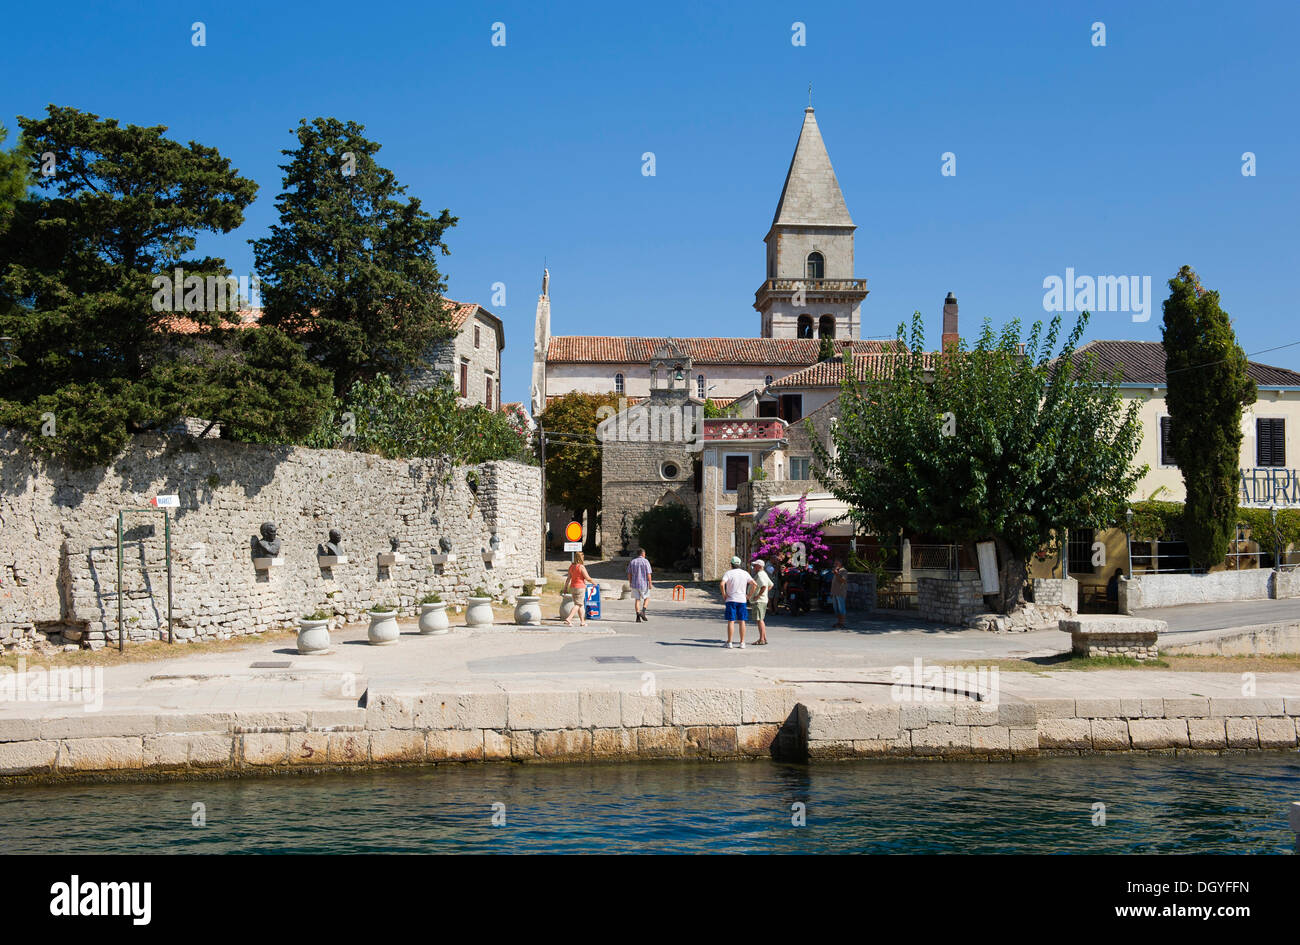 Church and fortified walls in Osor, Cres Island, Adriatic Sea, Kvarner Gulf, Croatia, Europe Stock Photo